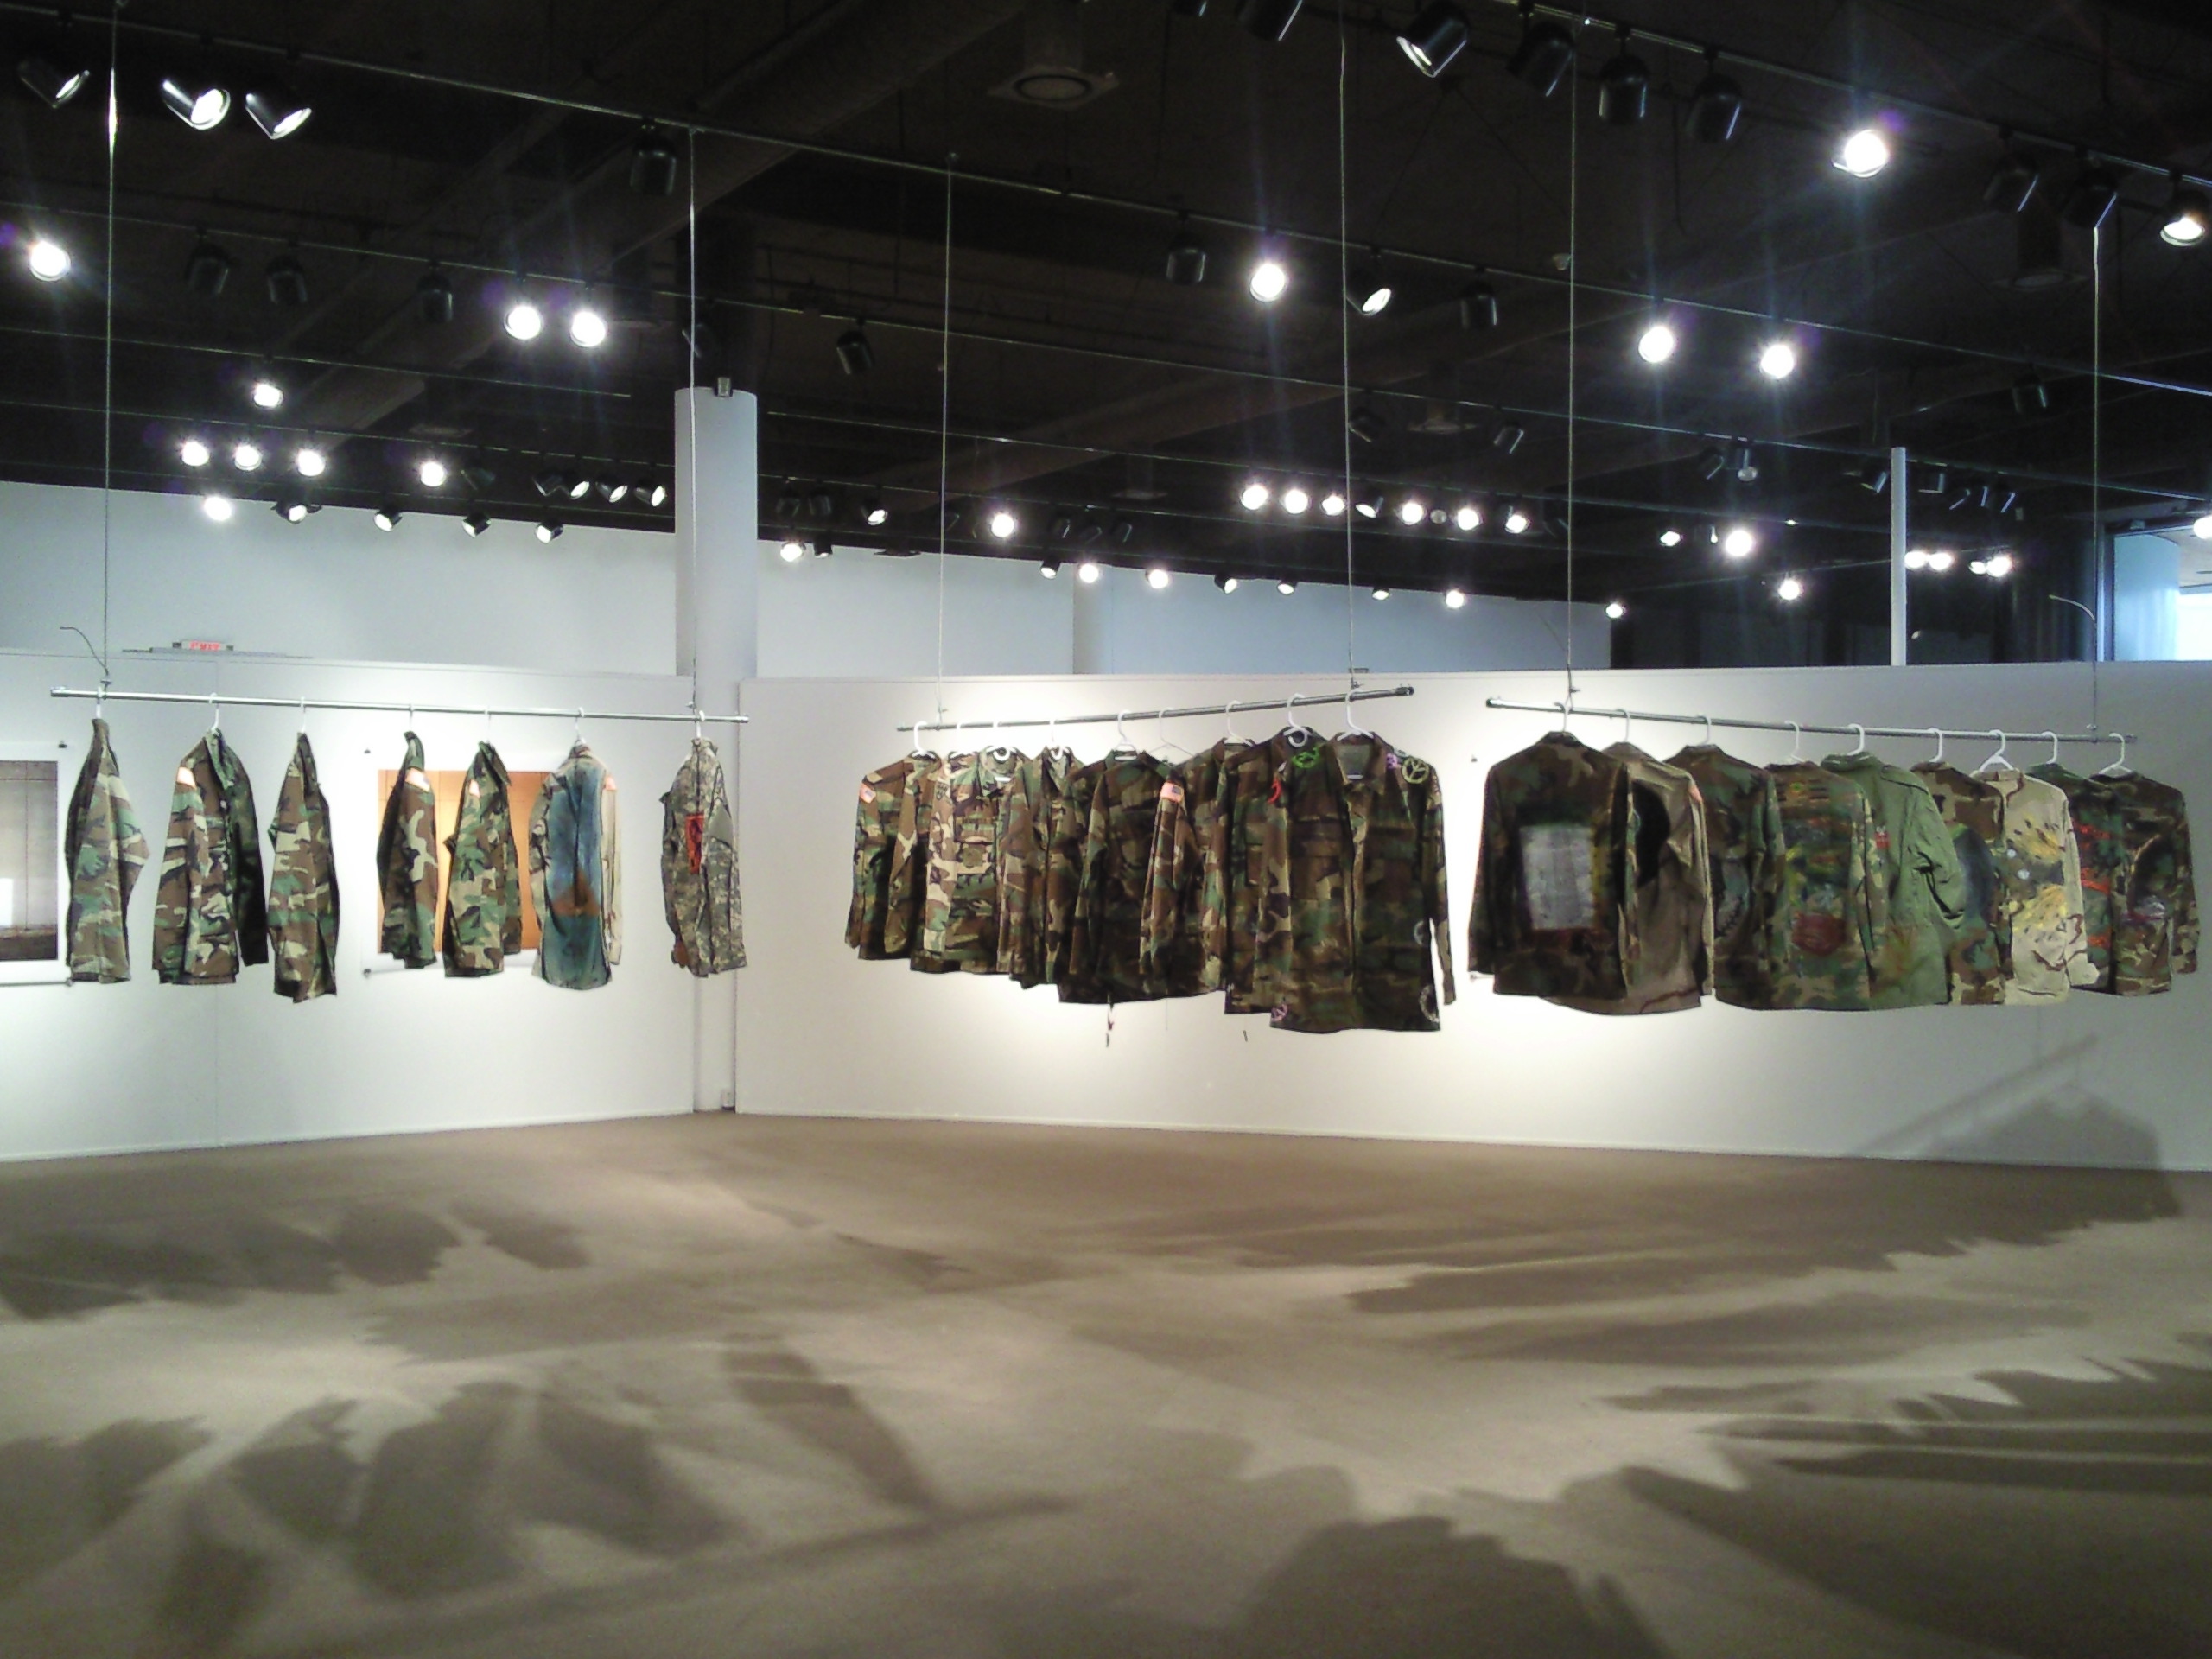 in-formation art exhibit shown in art gallery